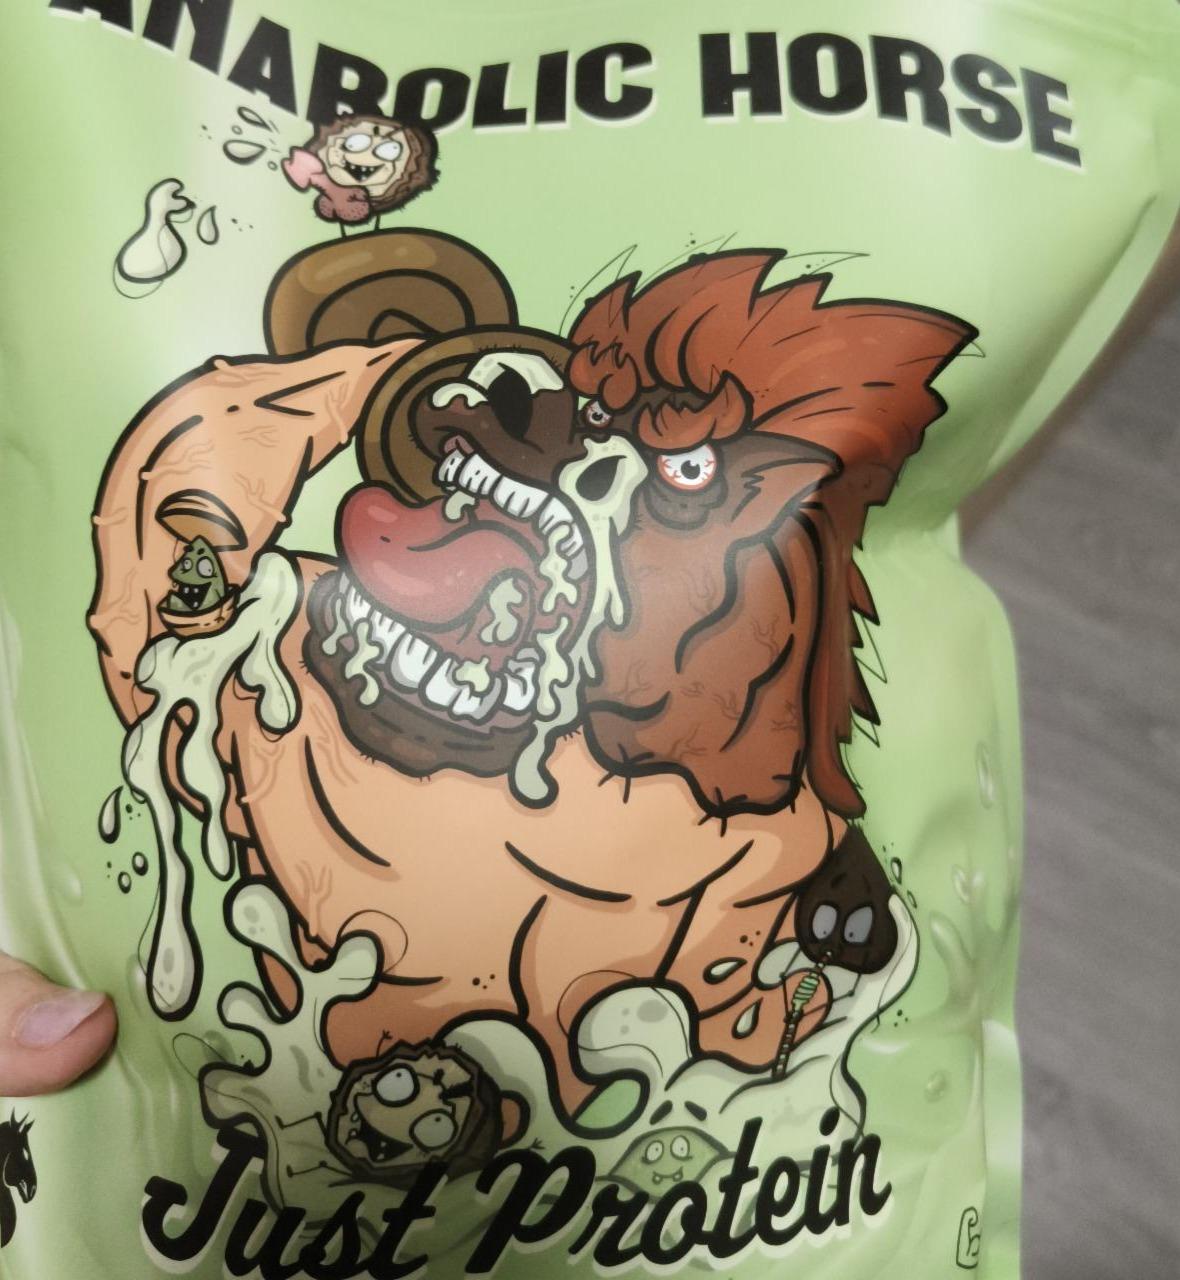 Fotografie - Just Protein pistácie-koko* Anabolic Horse